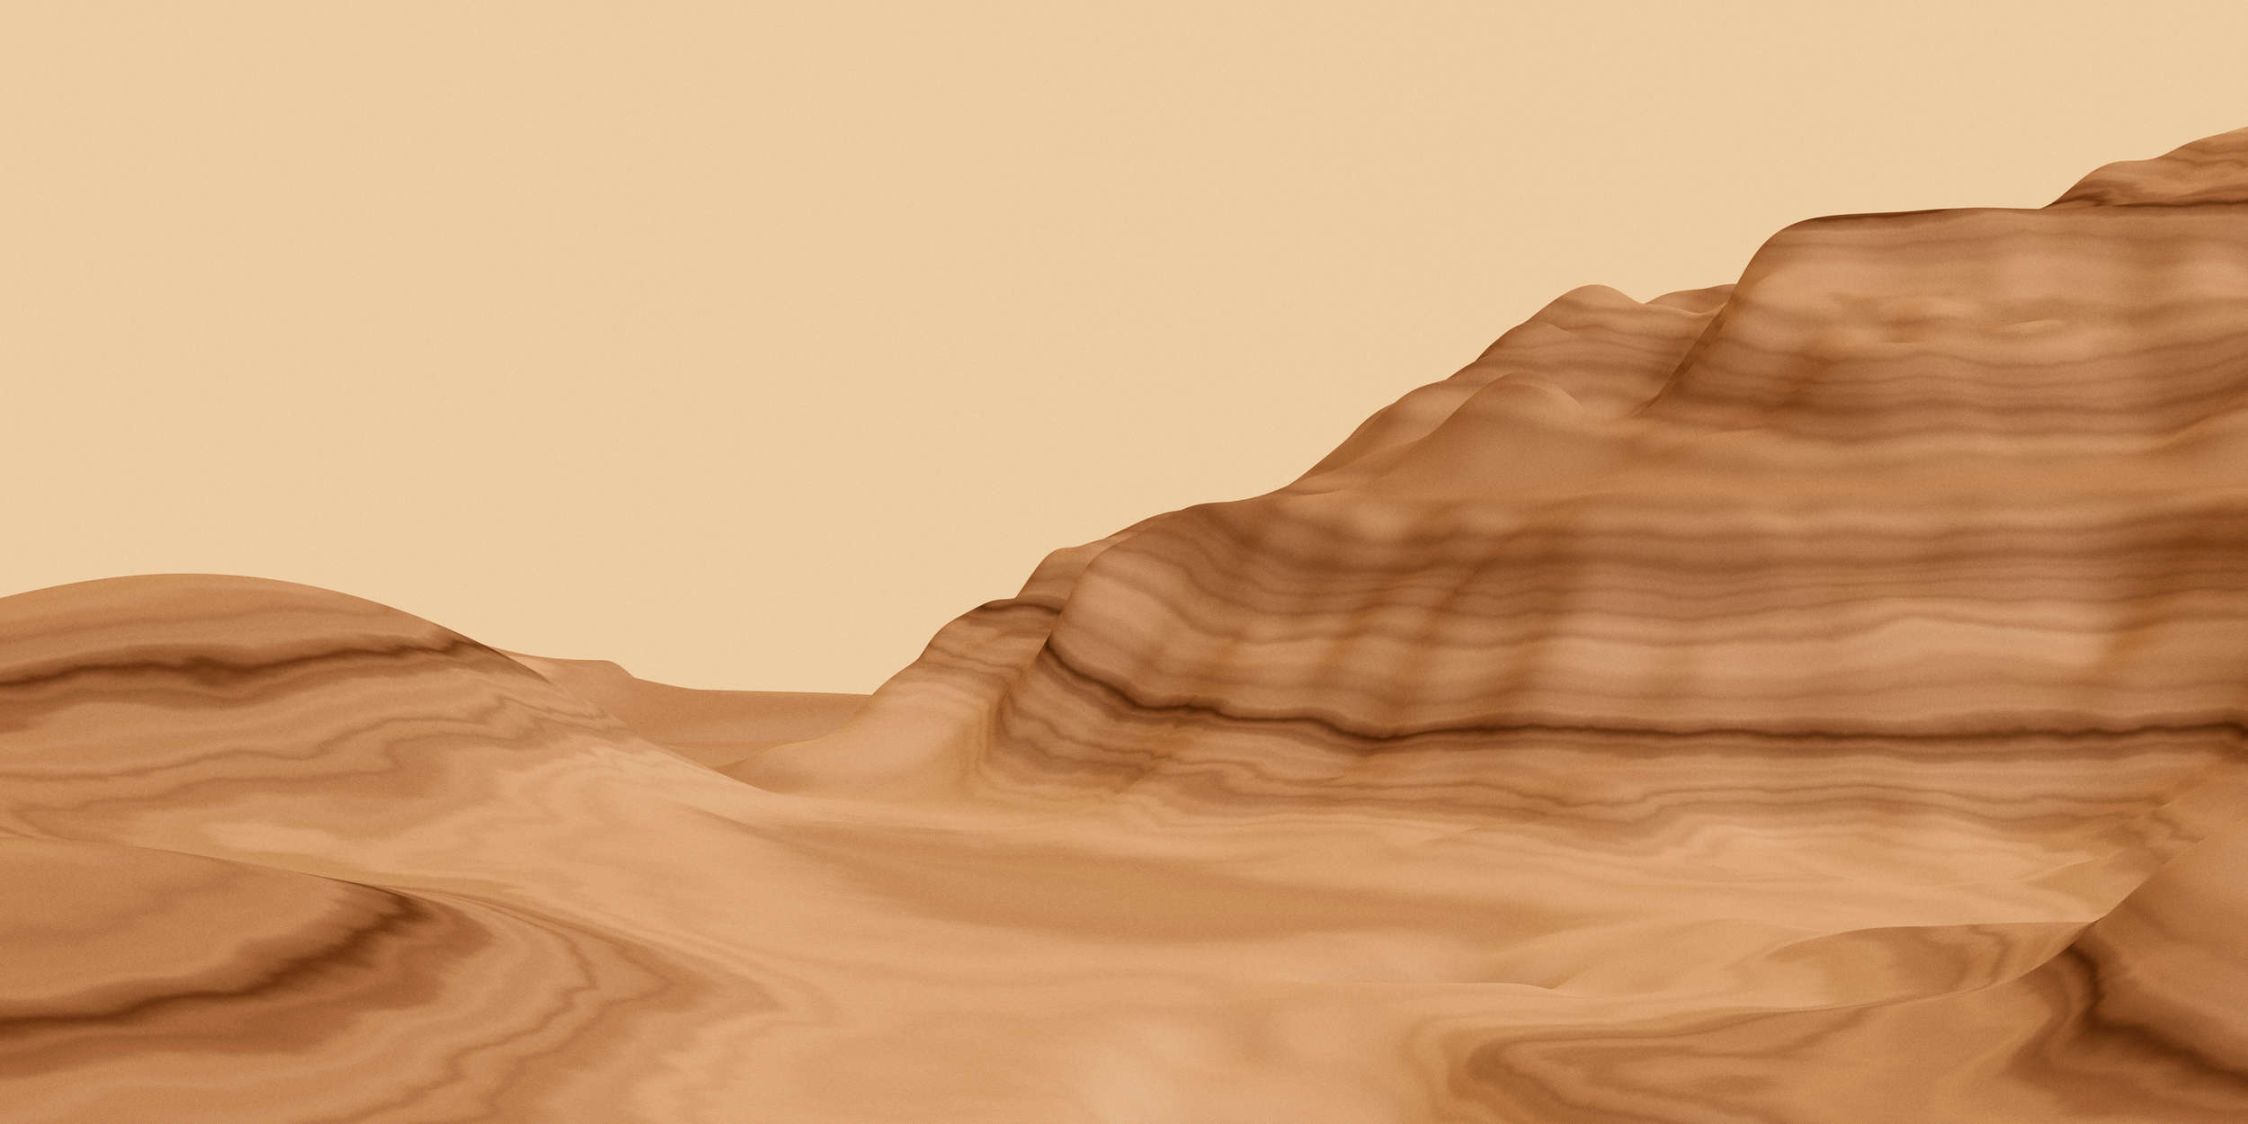             Photo wallpaper »luke« - Abstract desert landscape - Smooth, slightly shiny premium non-woven fabric
        